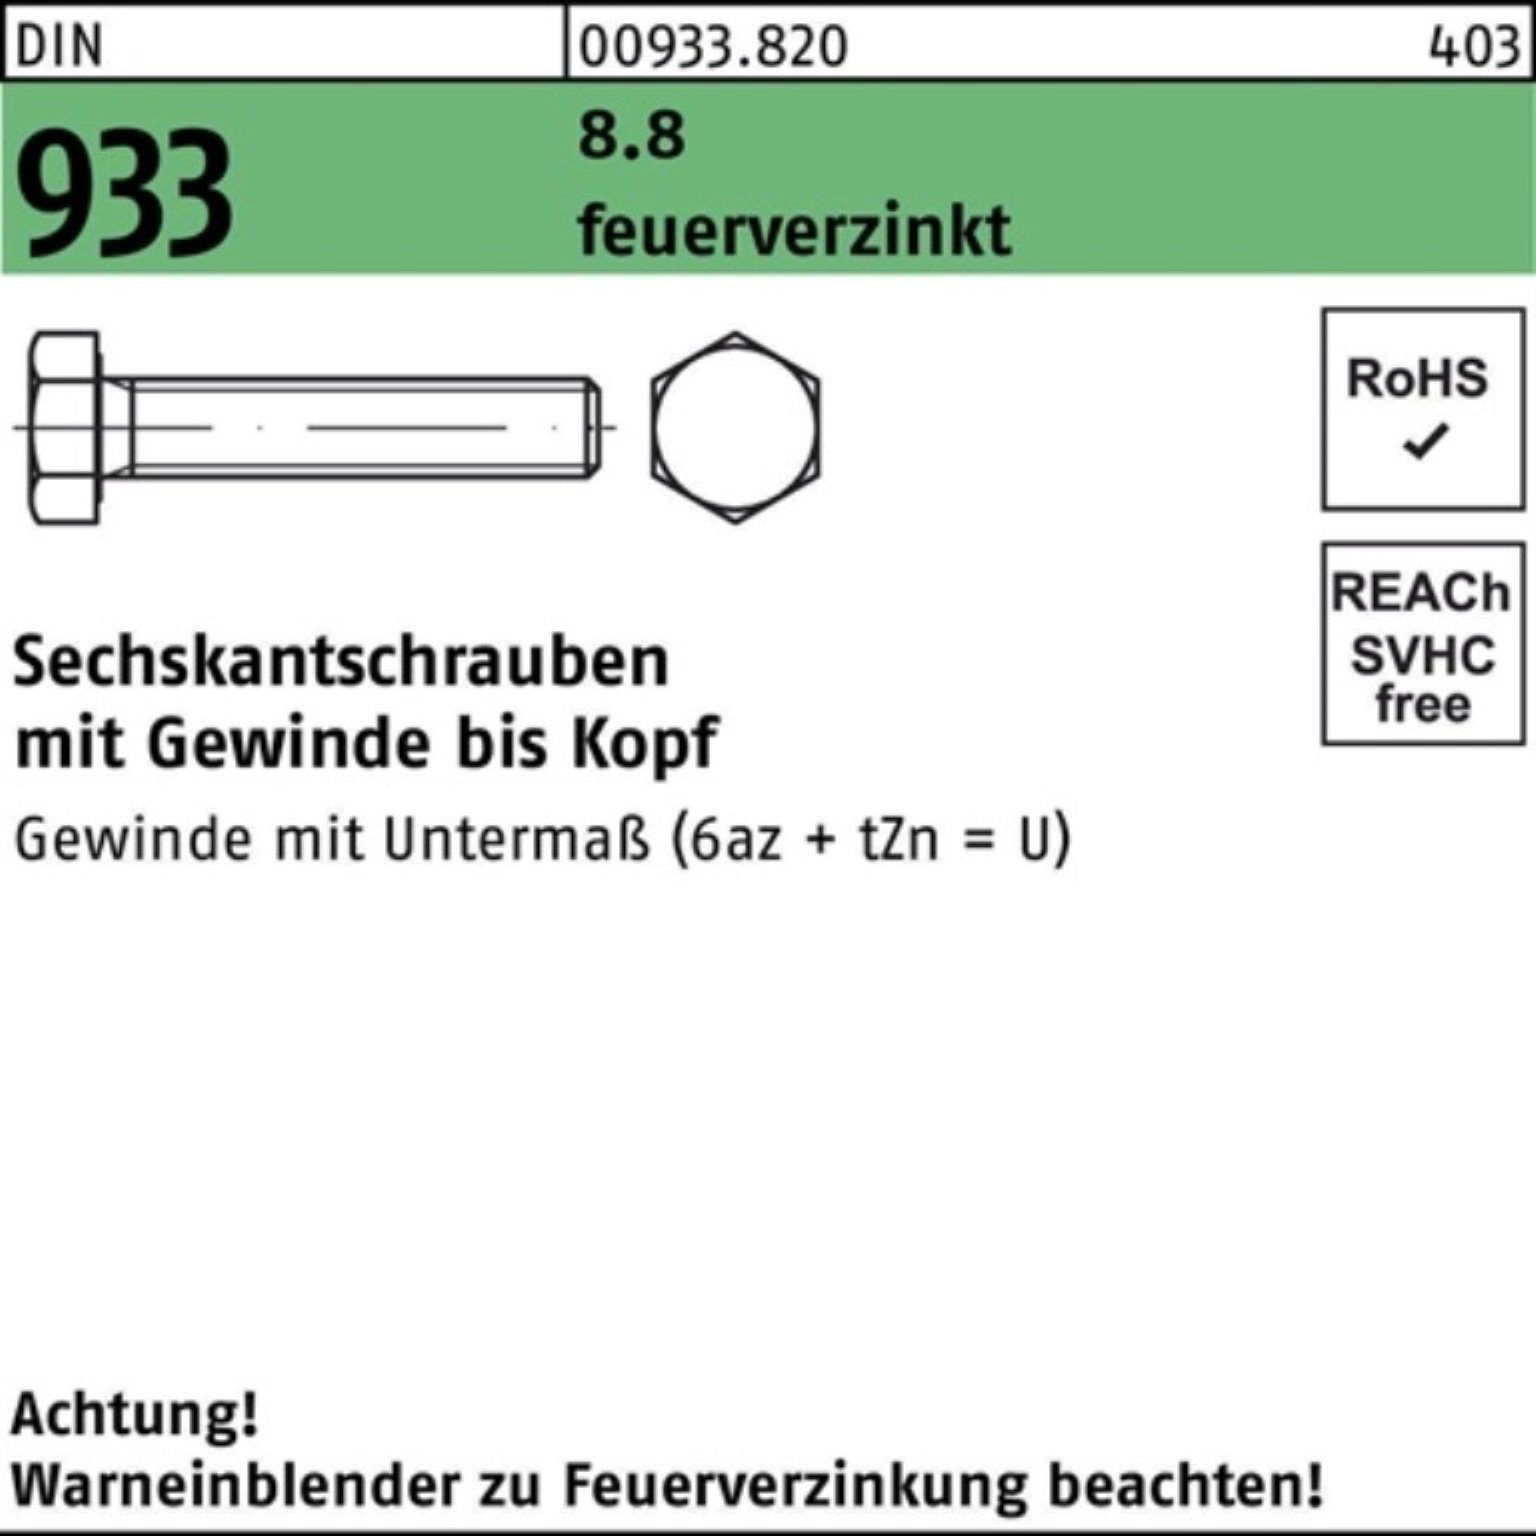 Reyher Sechskantschraube 933 DIN 8.8 200 VG feuerverz. 25 Sechskantschraube Pack 200er Stü M8x